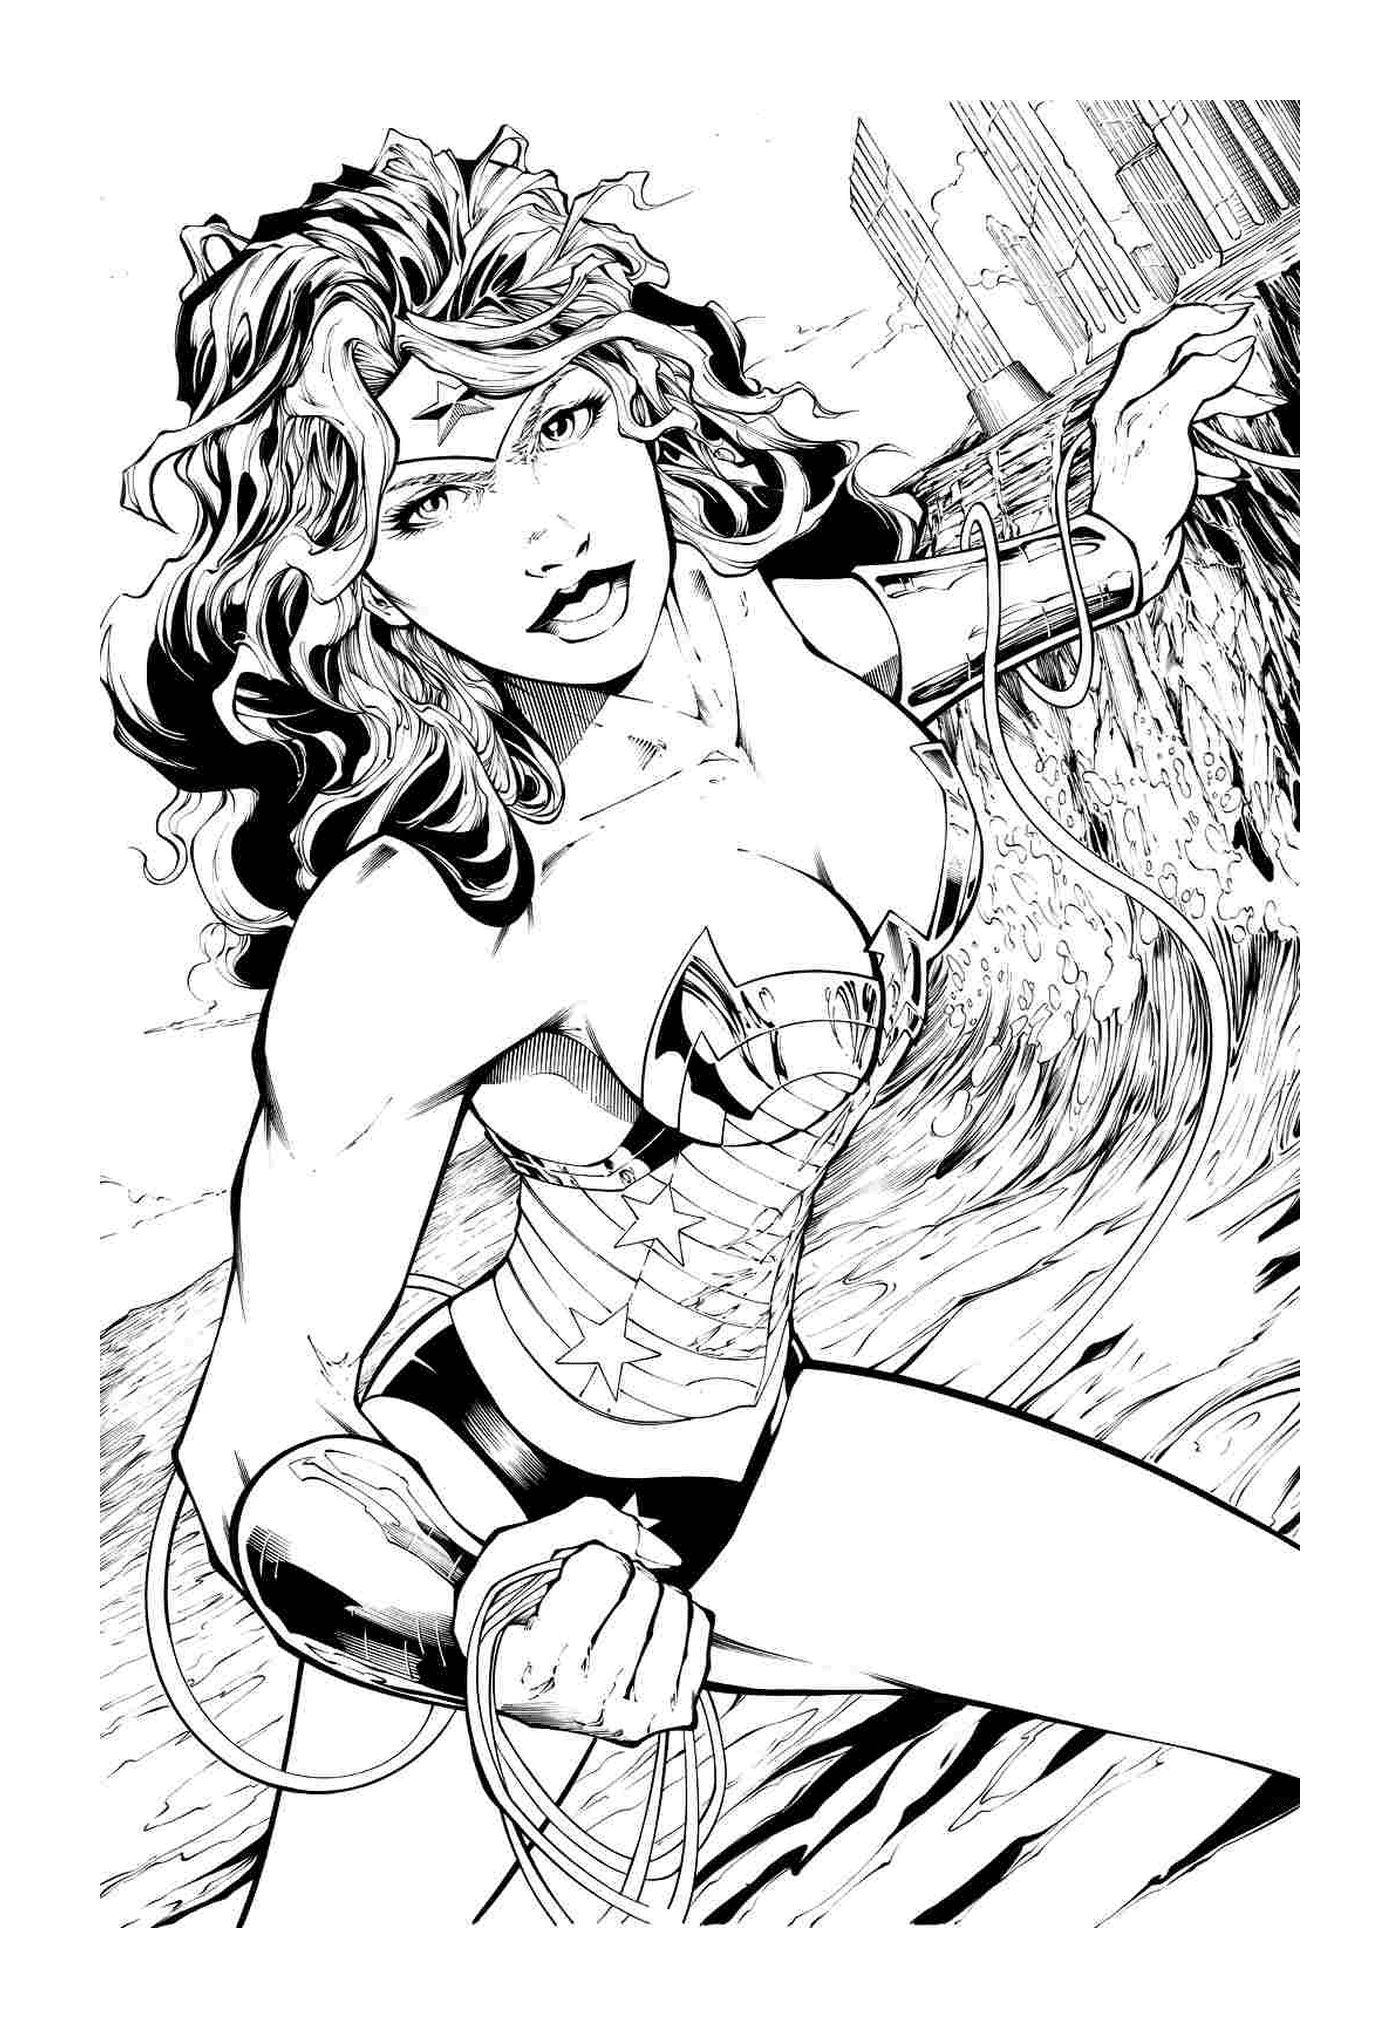  Wonder Woman adult in combat 